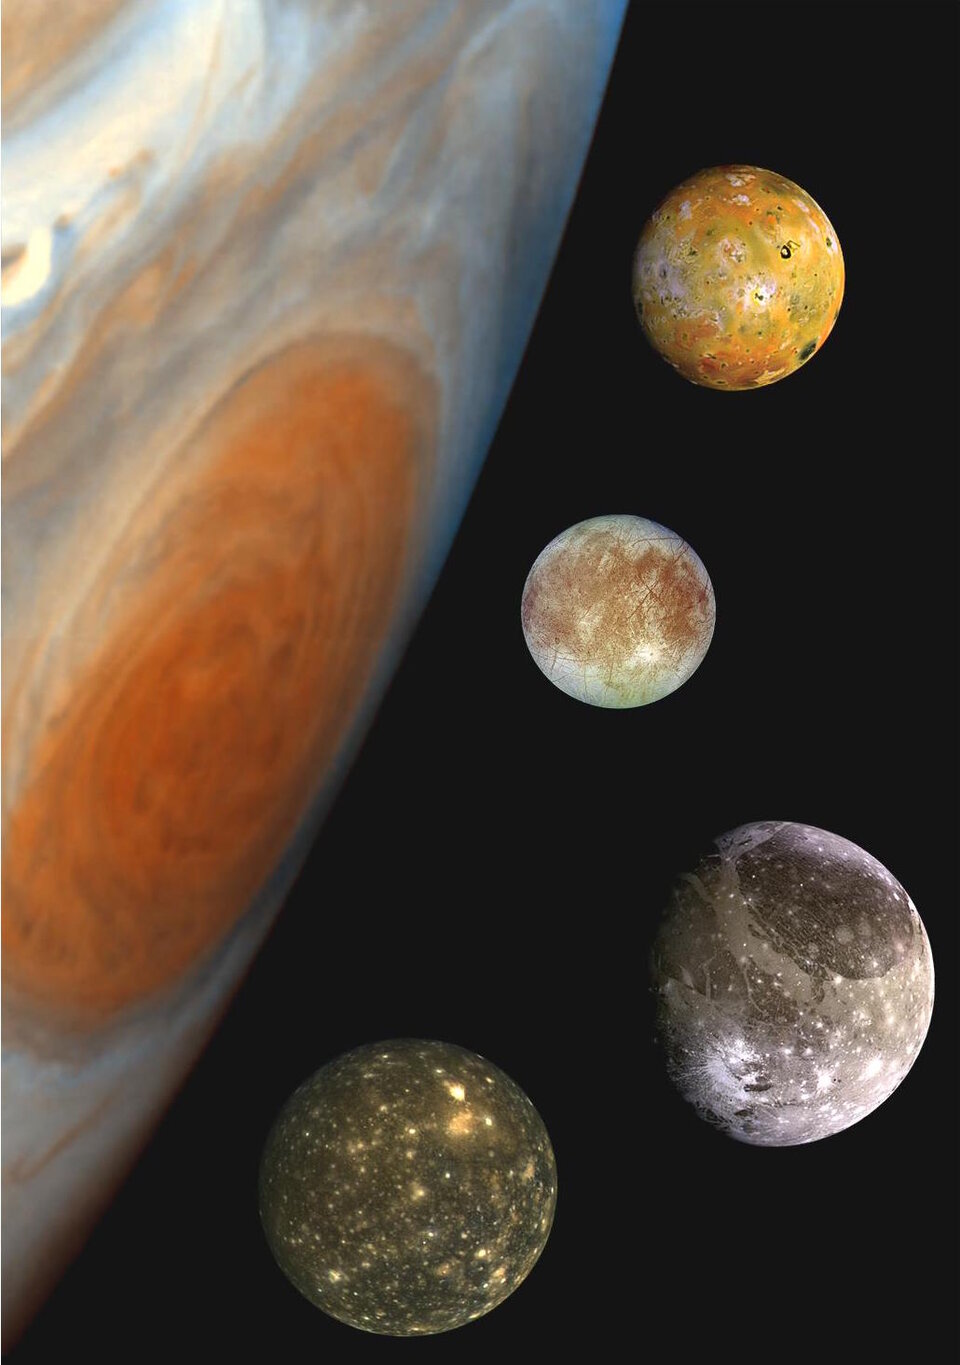 Jupiter's largest moons